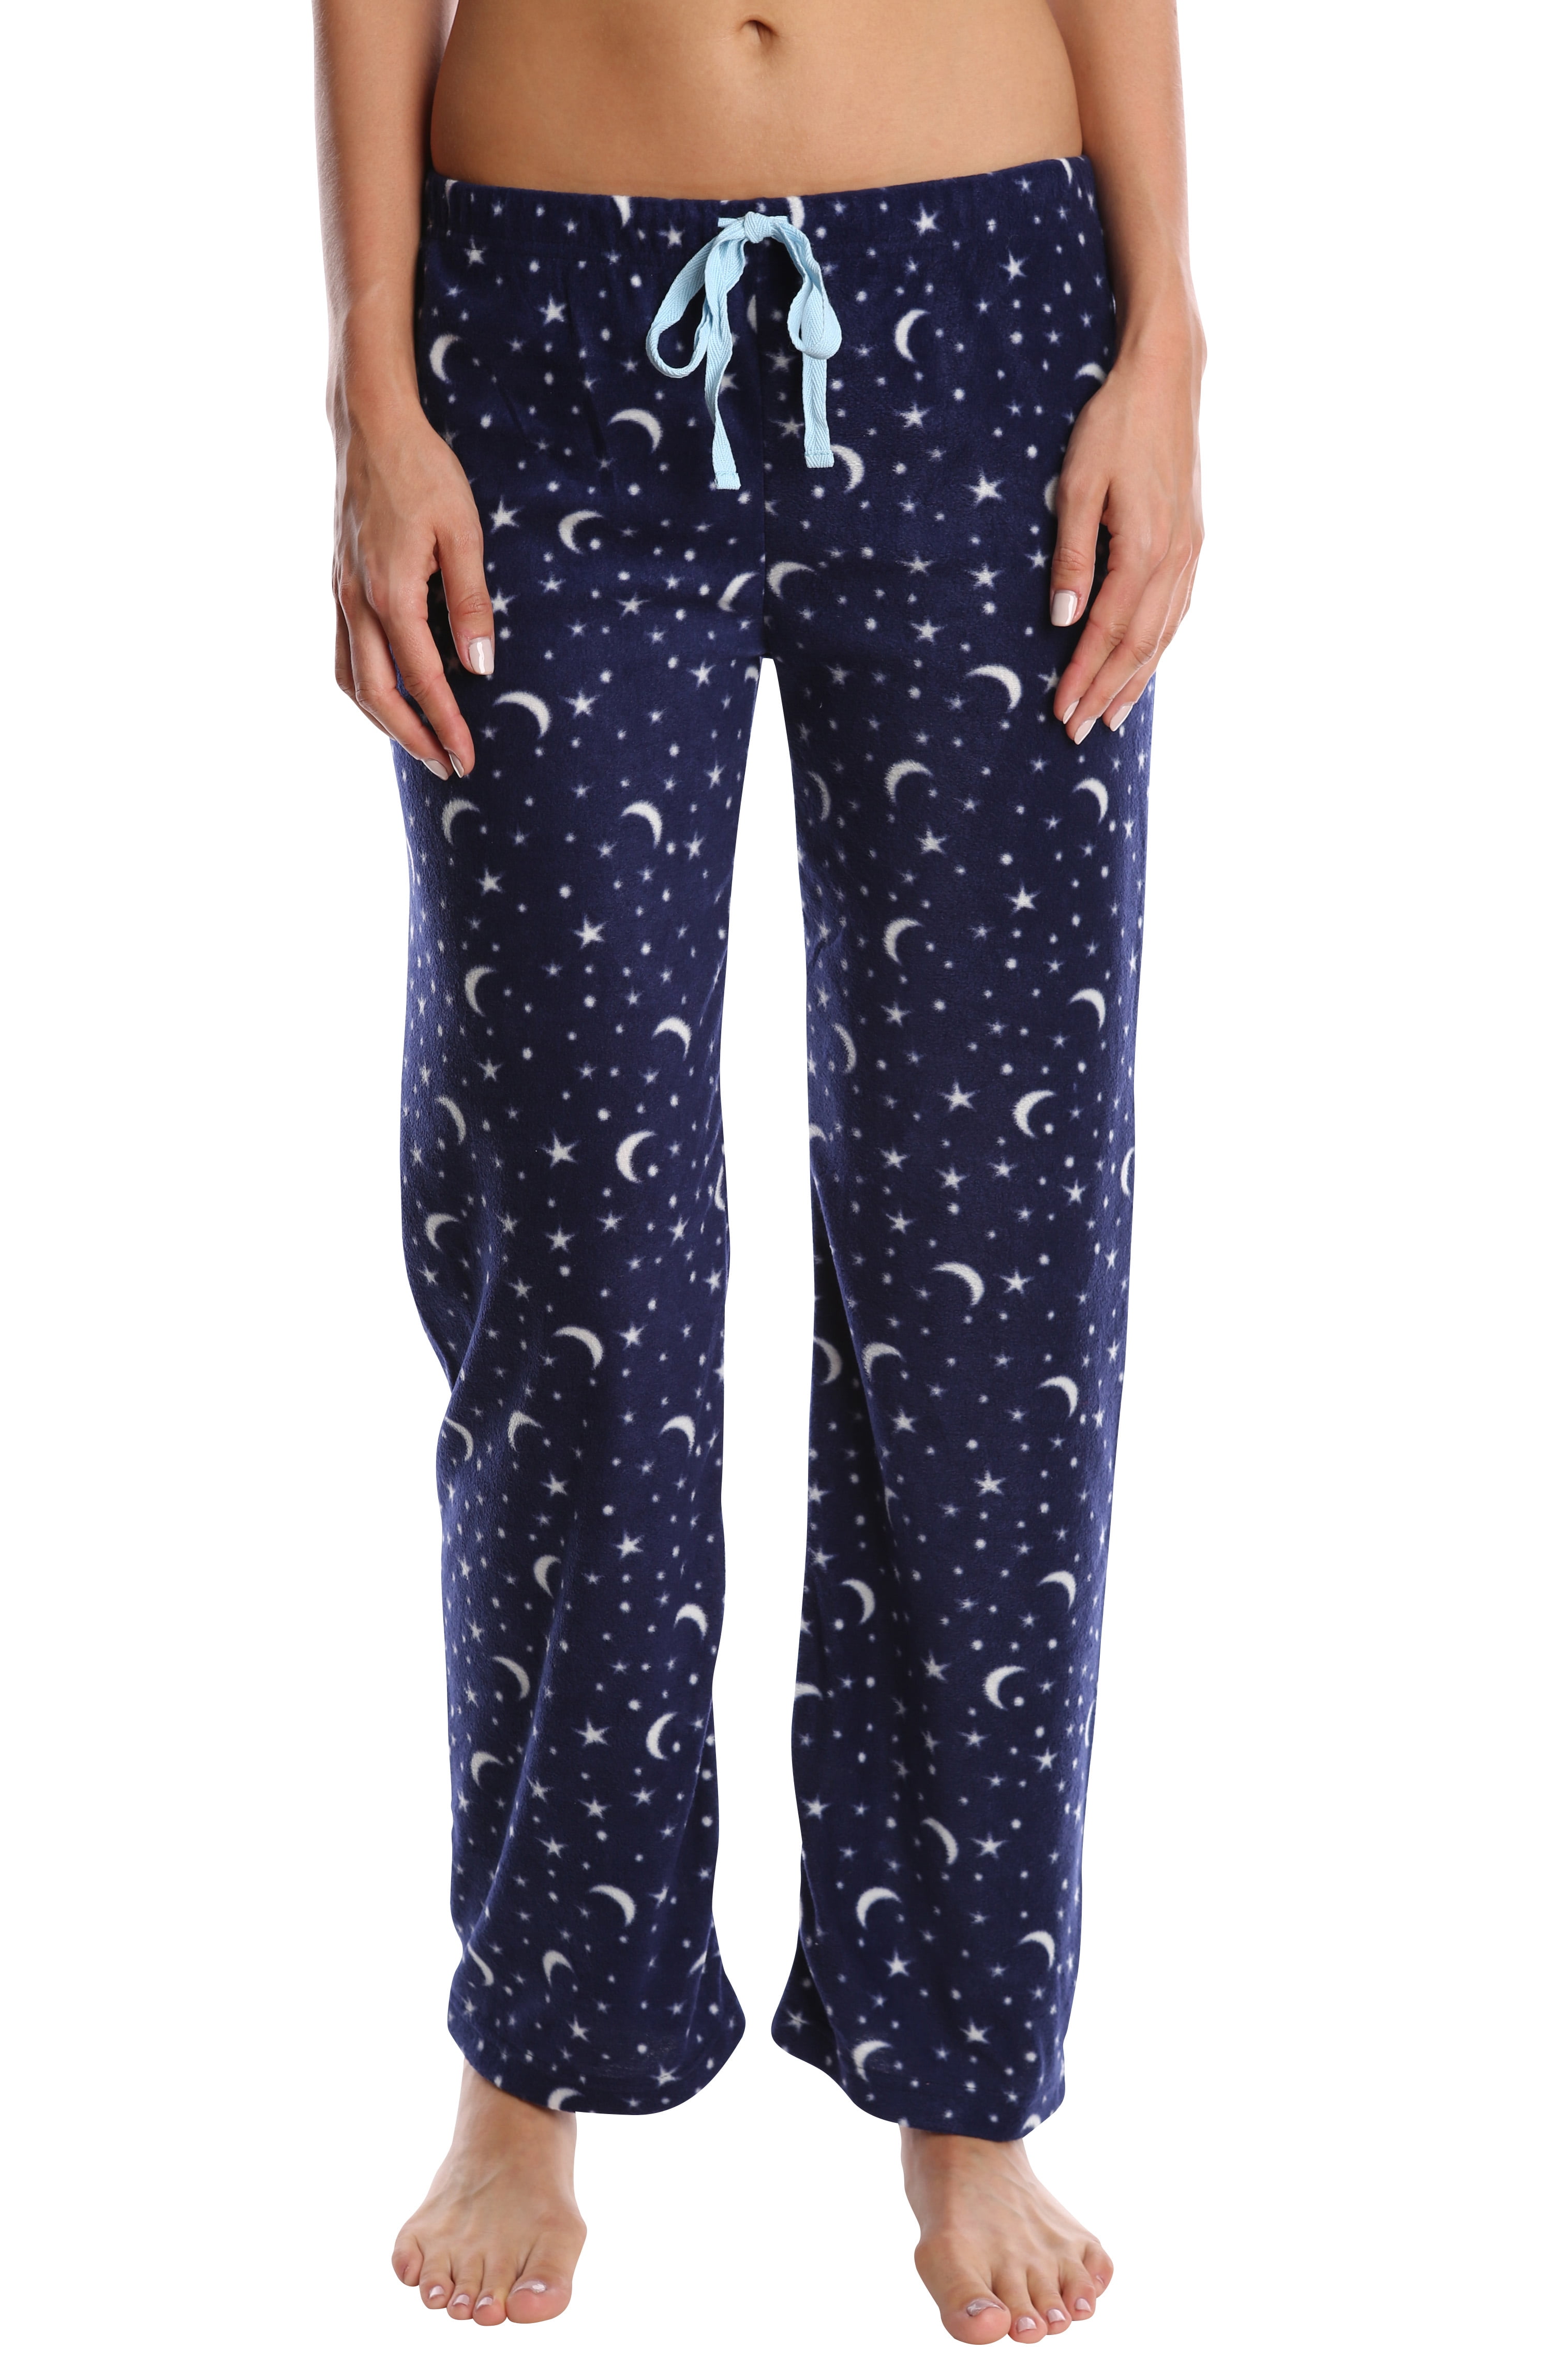 BLIS - Blis Adult Woman Women's Fuzzy Fleece Pajama PJ Pants with ...